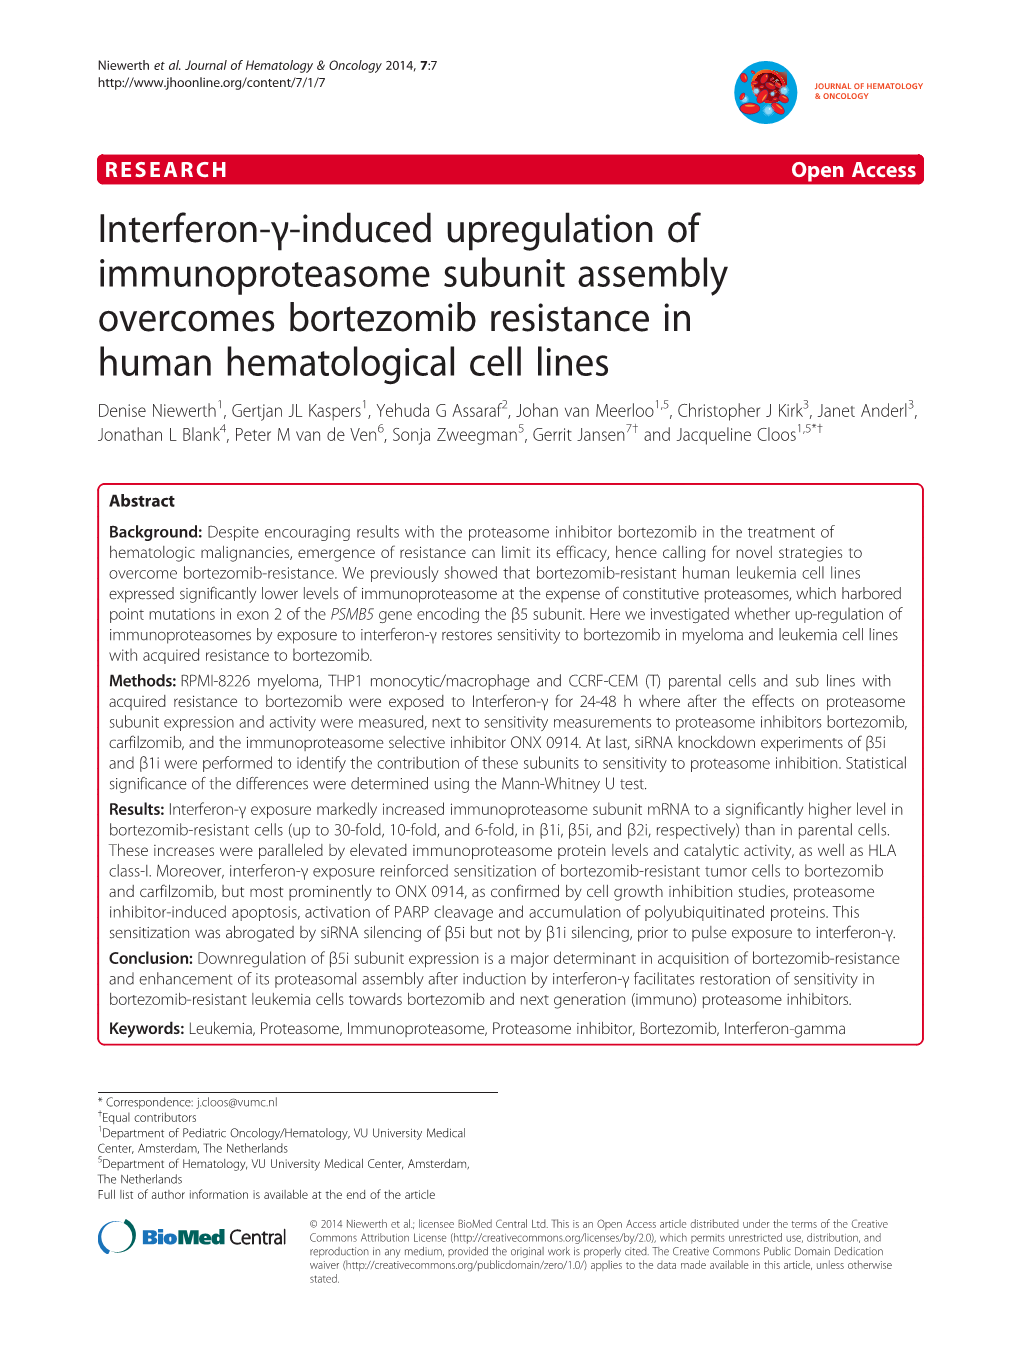 Interferon-Γ-Induced Upregulation of Immunoproteasome Subunit